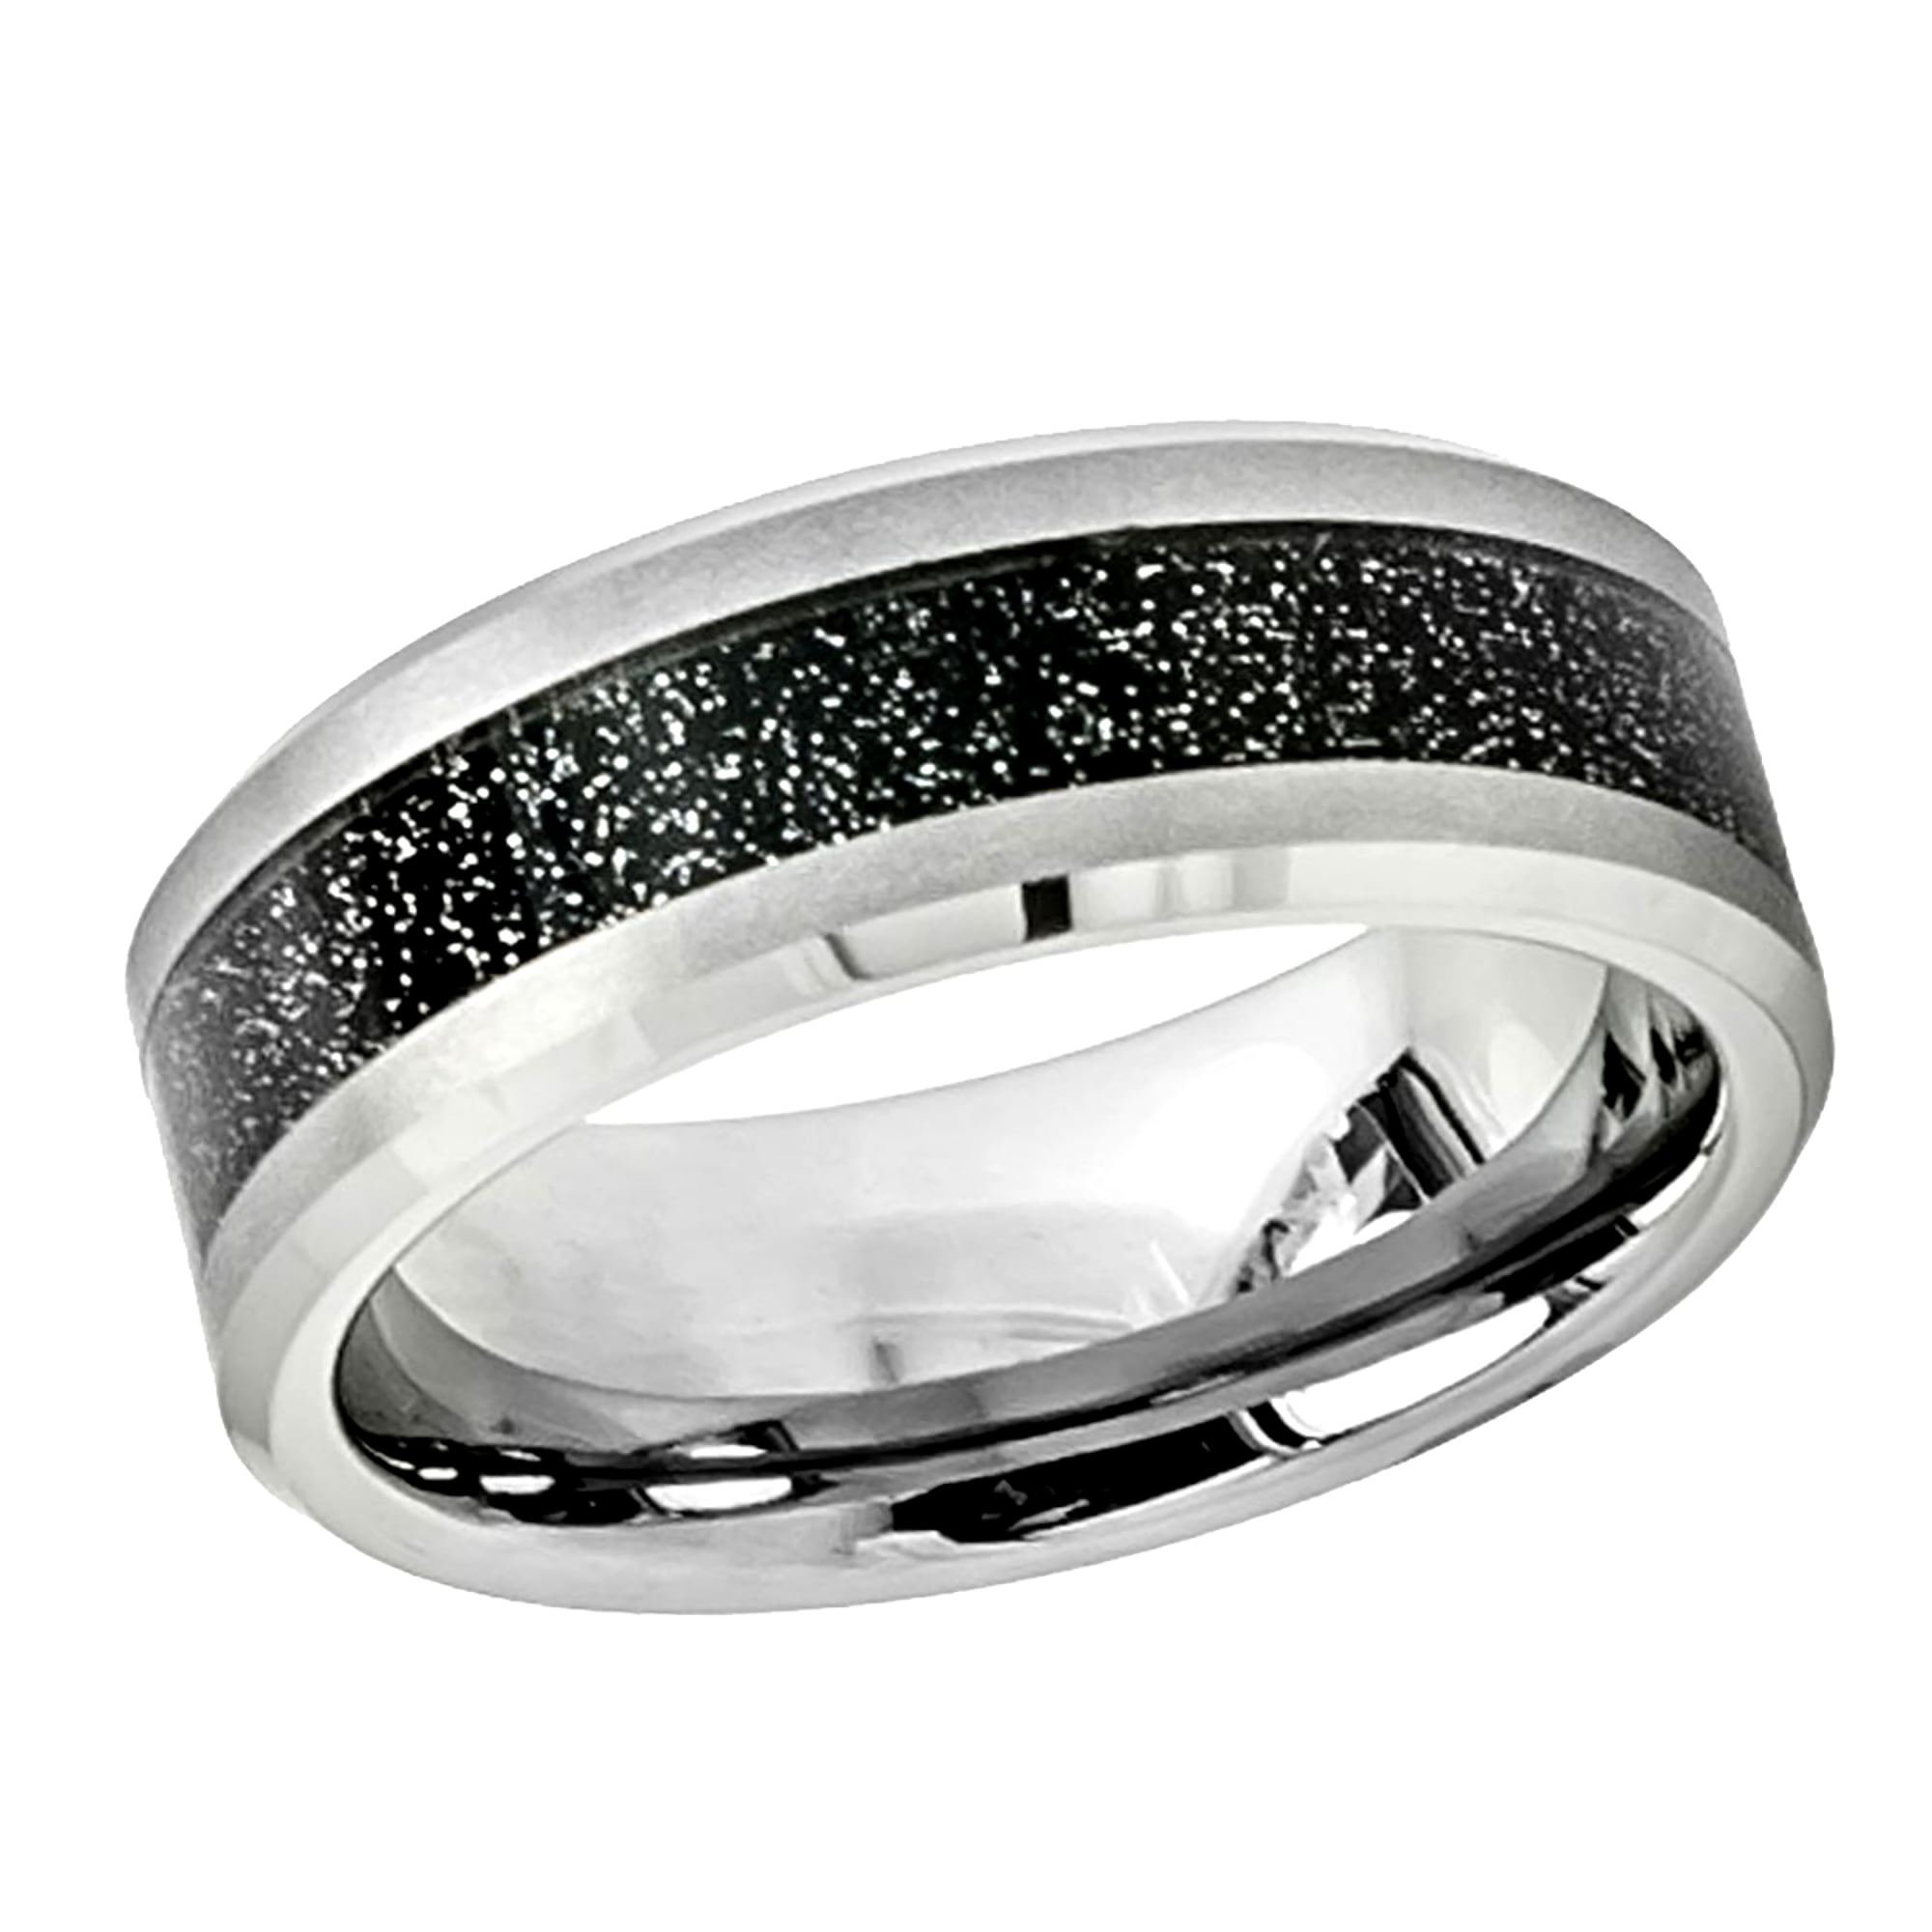 Men s Women s Tungsten Wedding Band Engagement Ring 8mm Shiny Beveled Edge with Black Sandstone Carbon Fiber Inlay 28929056 e1f6 41dd 875f 27aee56cc516 1.5018c3666482b1195acbe2f738fb98a9